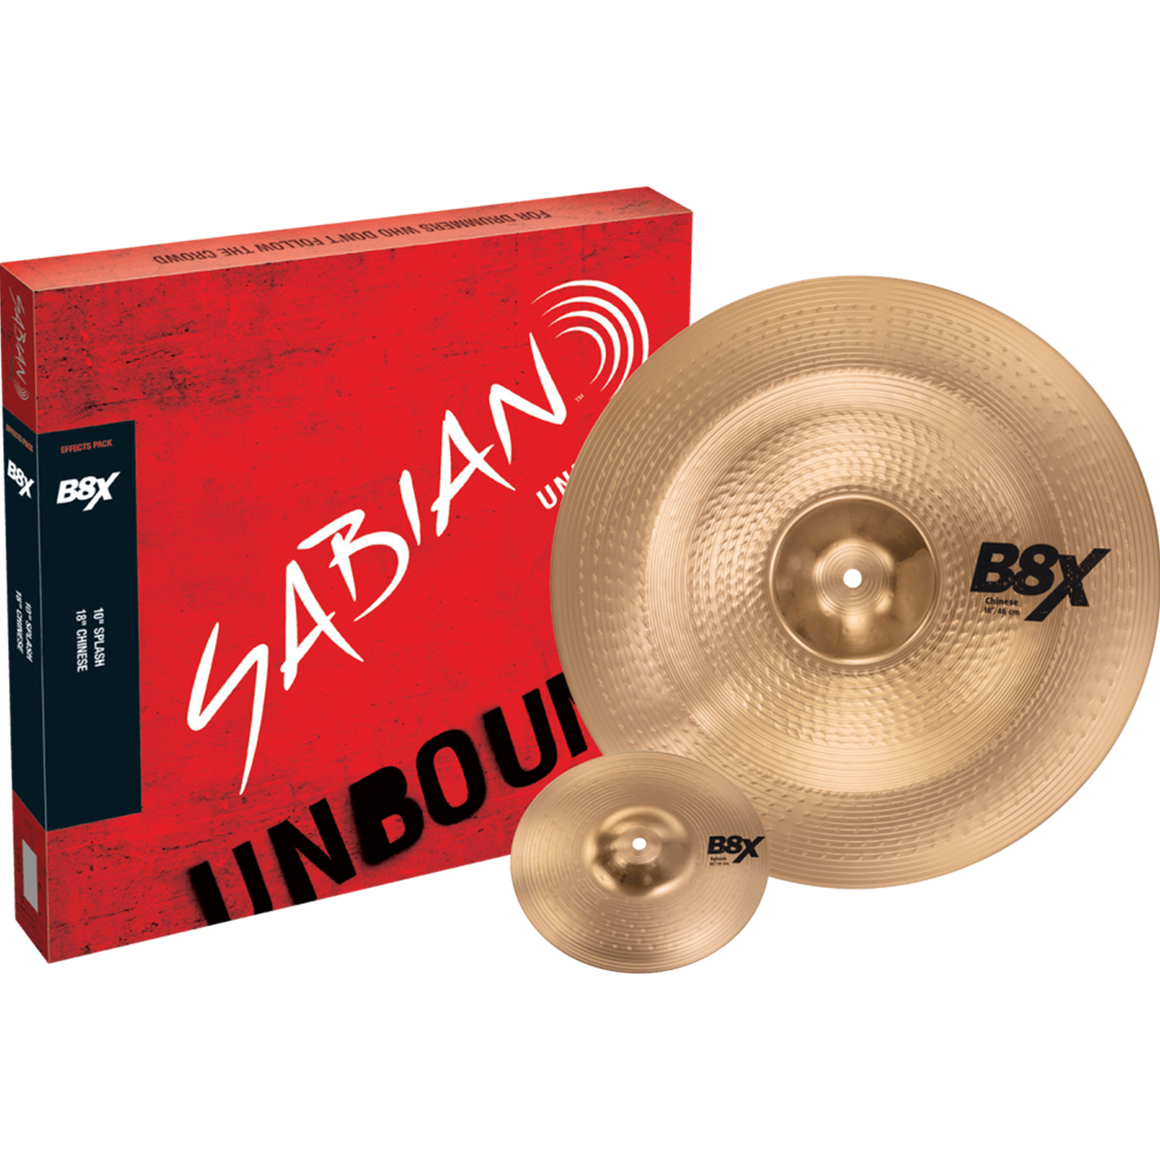 SABIAN 45005X B8X Effects Cymbal Pack